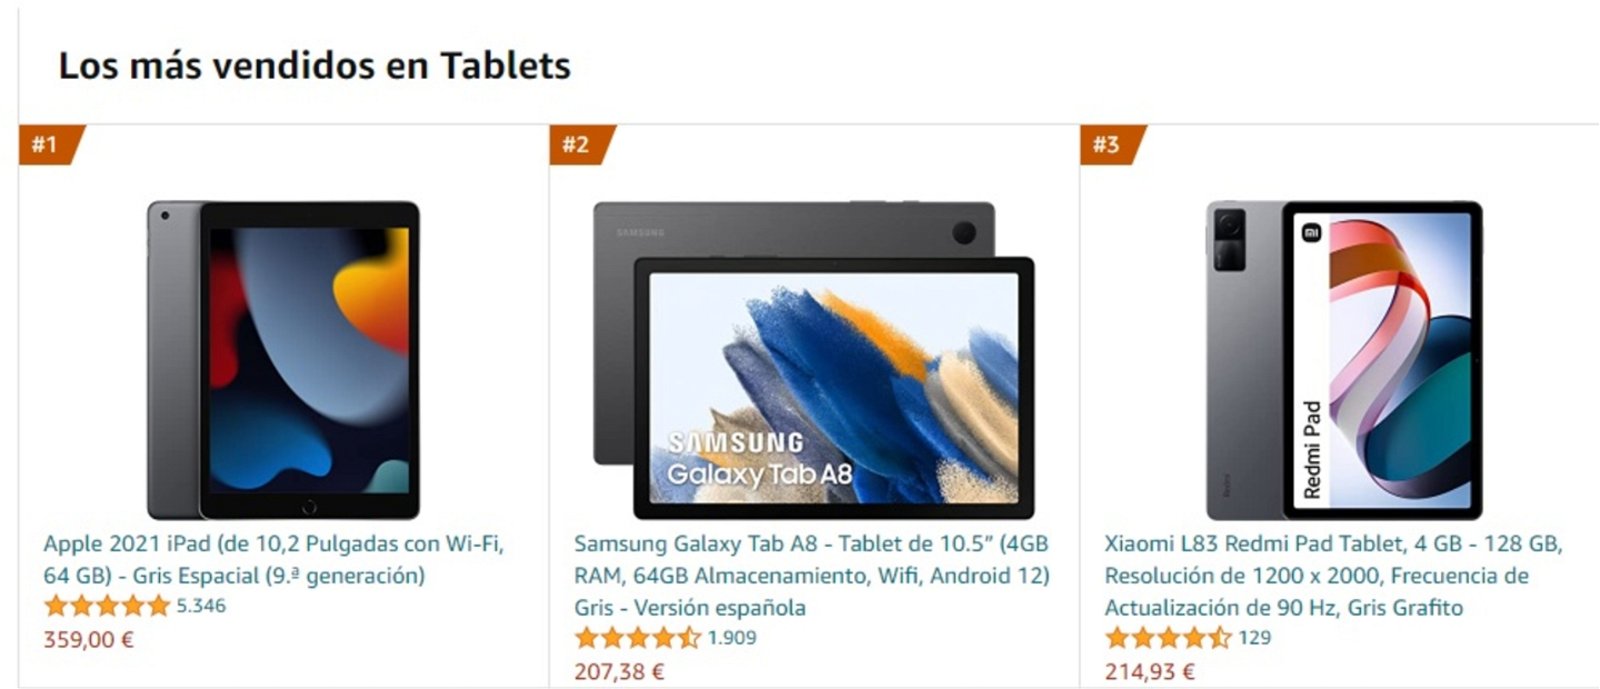 tablets mas vendidas amazon